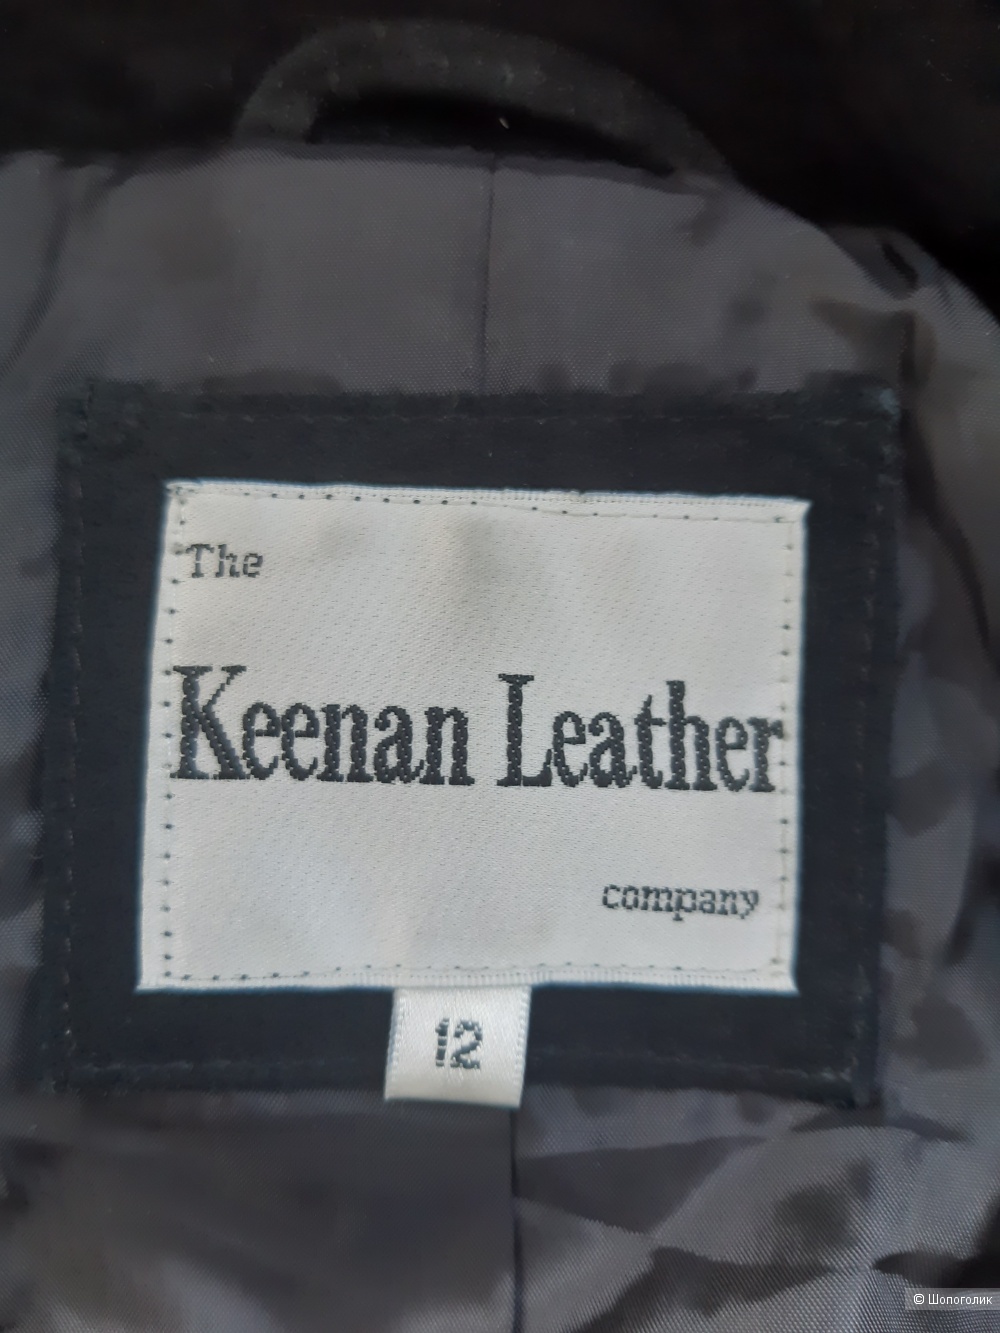 Тренч замшевый "Keenan leather" , р. М